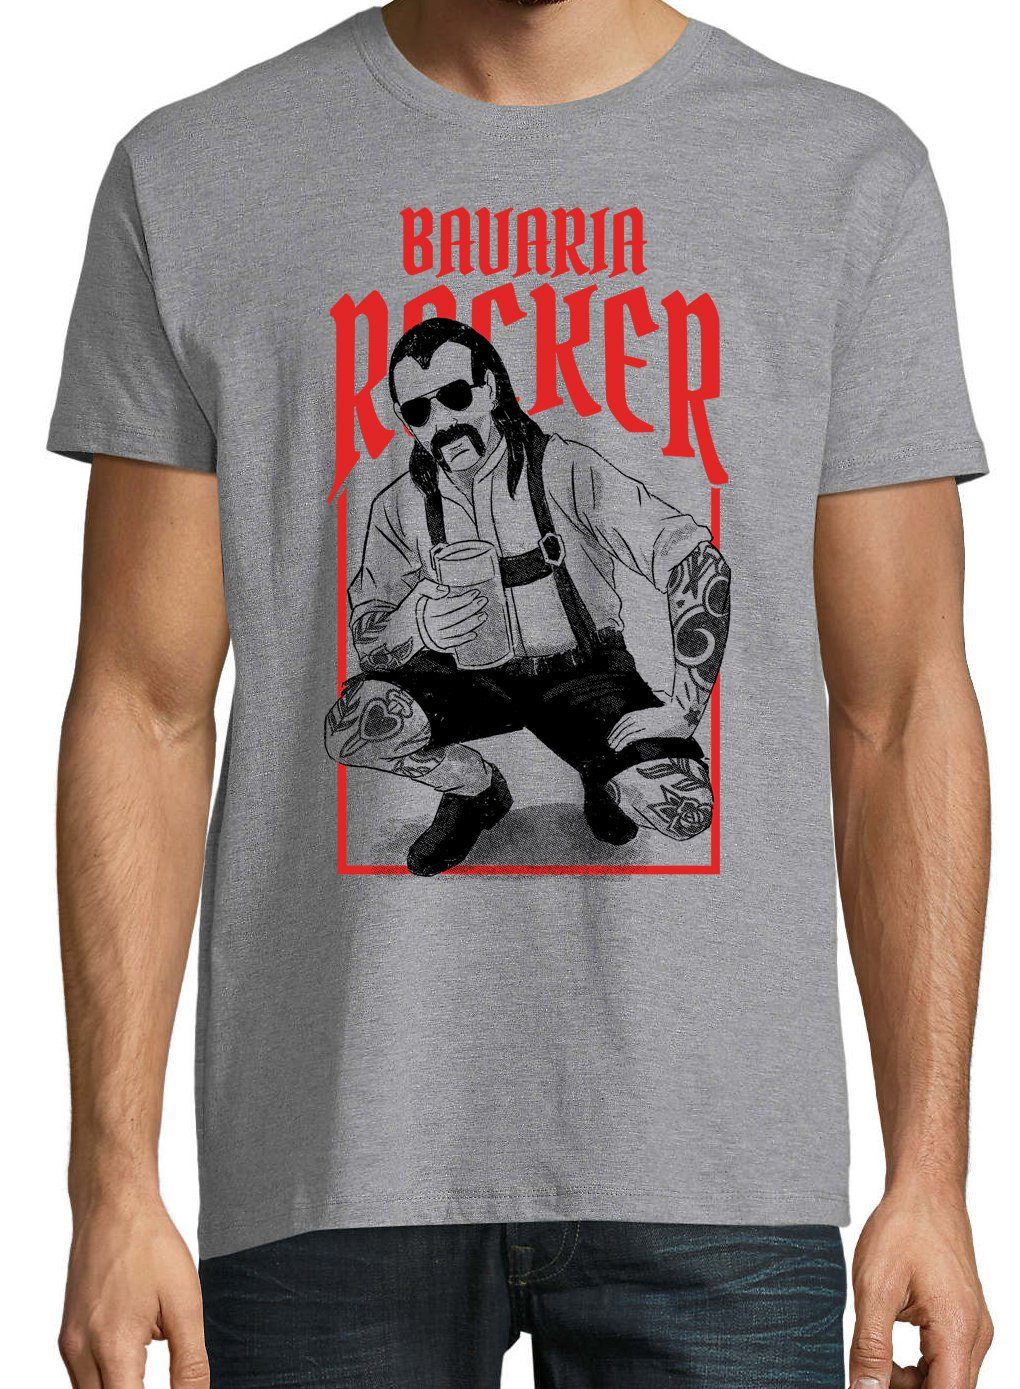 Rocker trendigem Grau T-Shirt Frontprint mit Bavaria Youth Shirt Herren Designz